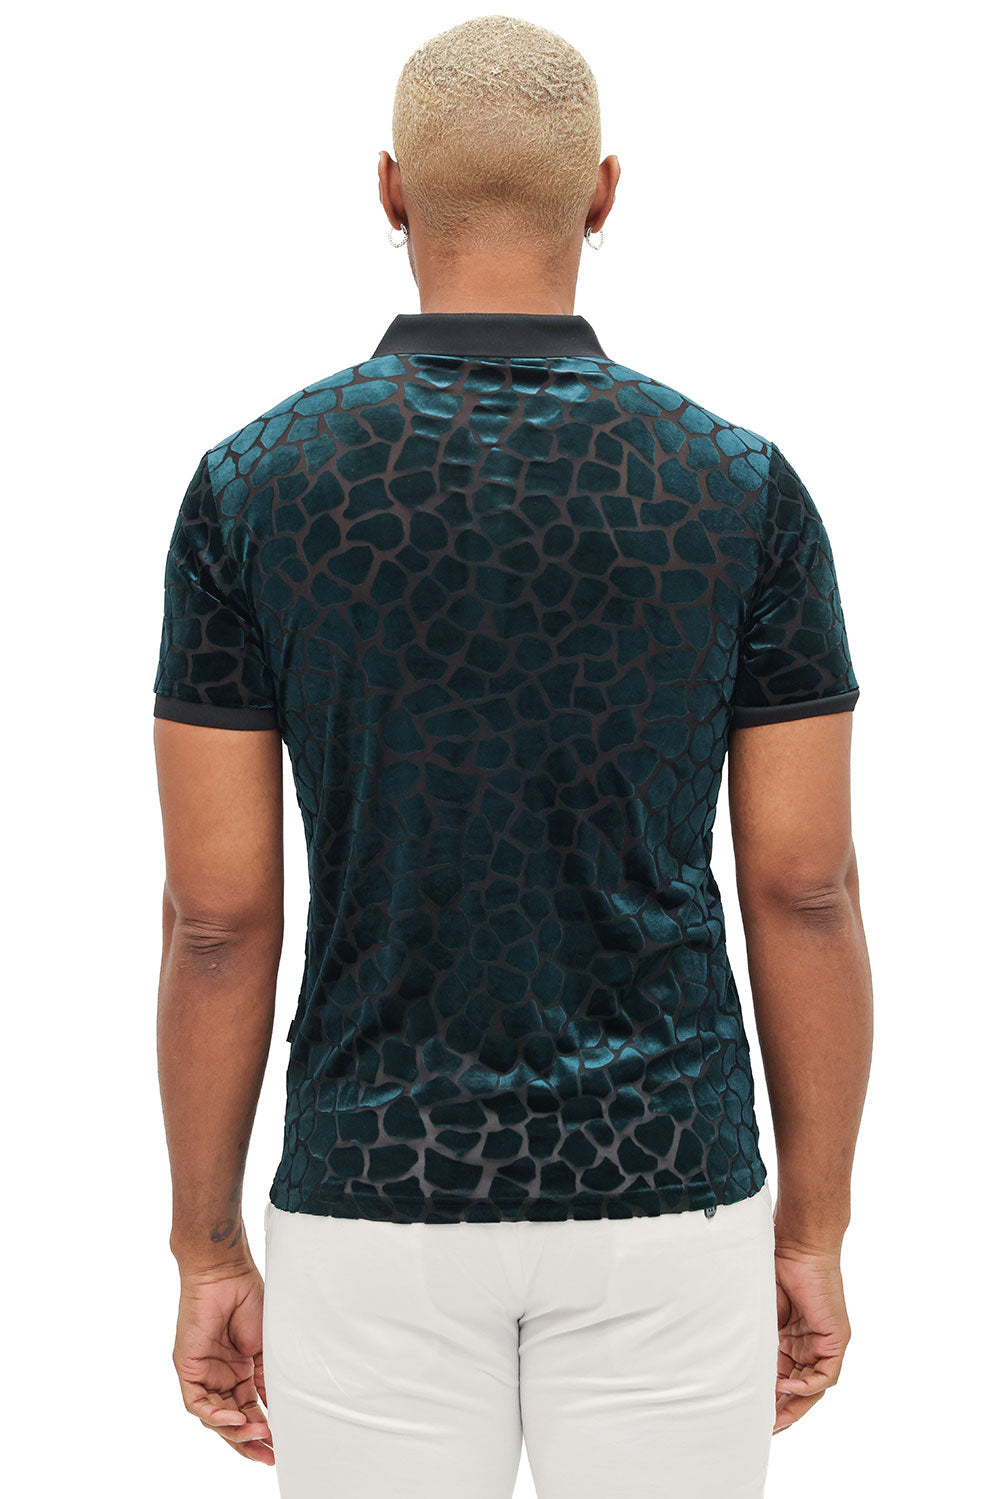 BARABAS Men's Leopard See Through Short Sleeve Polo Shirts 3PP838 Emerald Green